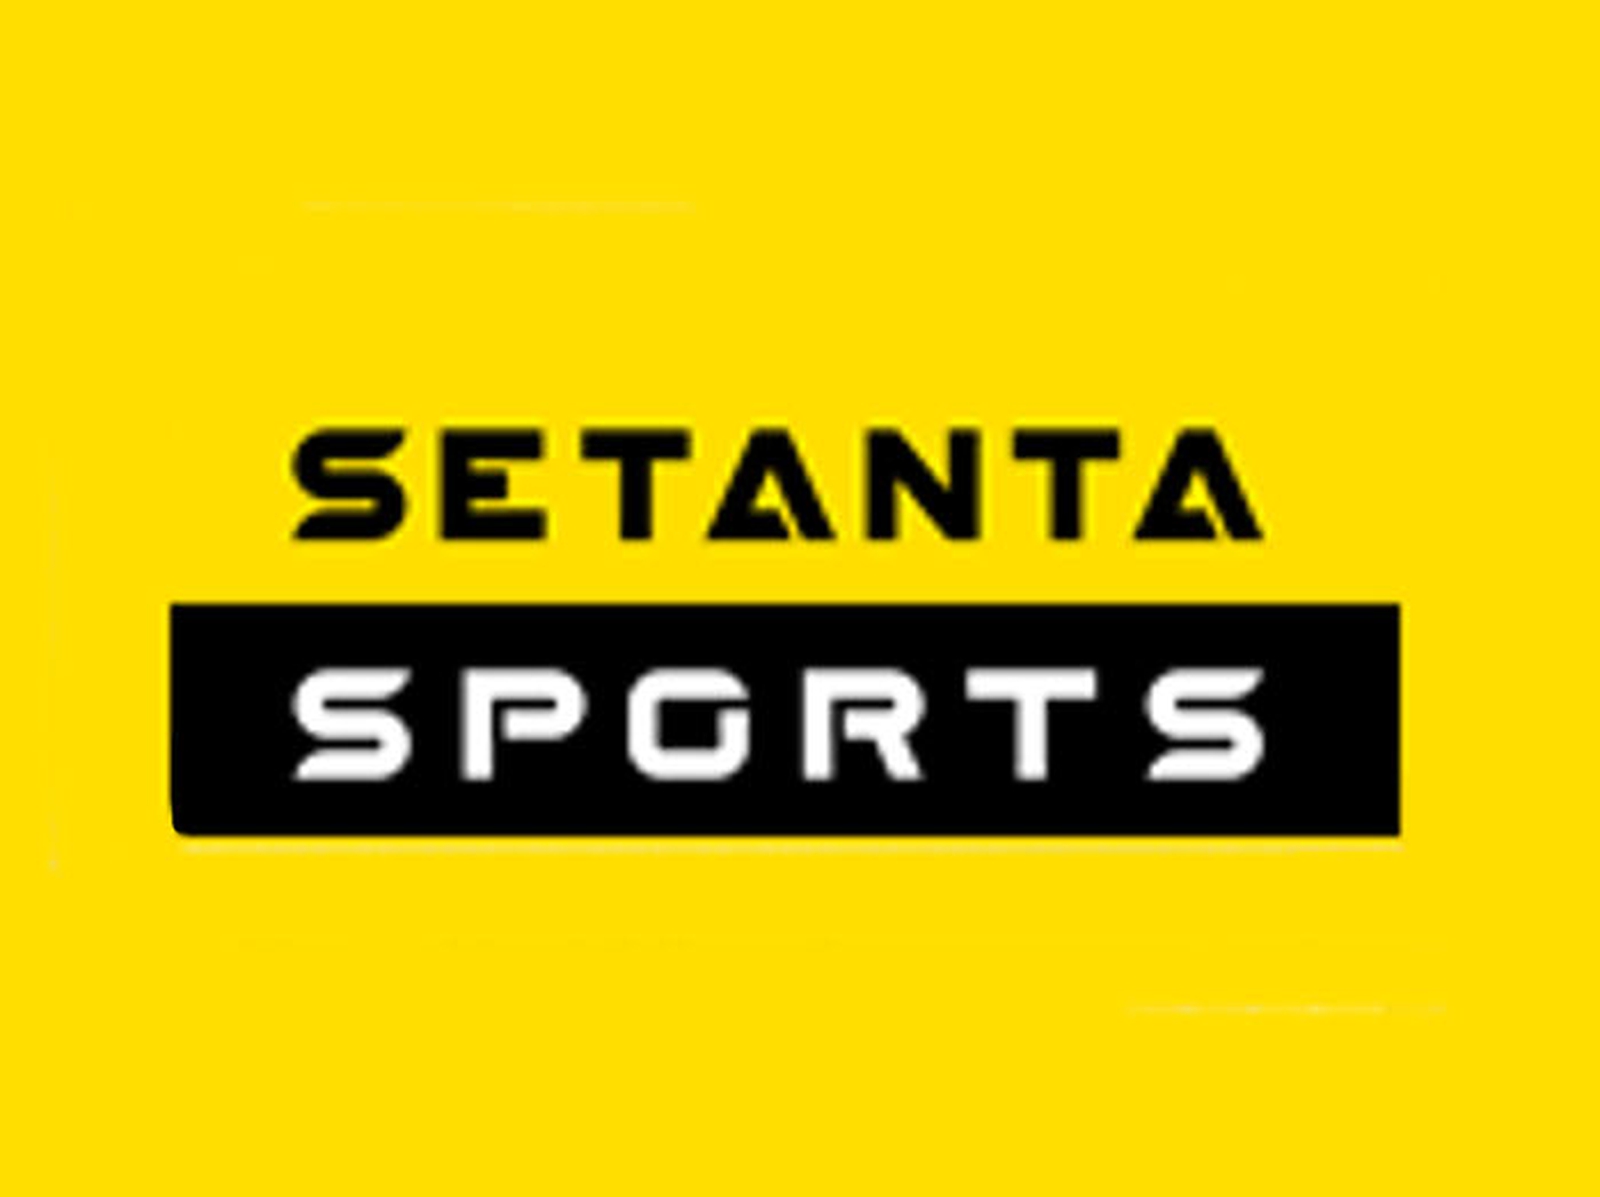 Setanta sports 1 прямой. Сетанта спорт. Сетанта спорт 1. Сетанта спорт логотип. Setanta Sports Eurasia.